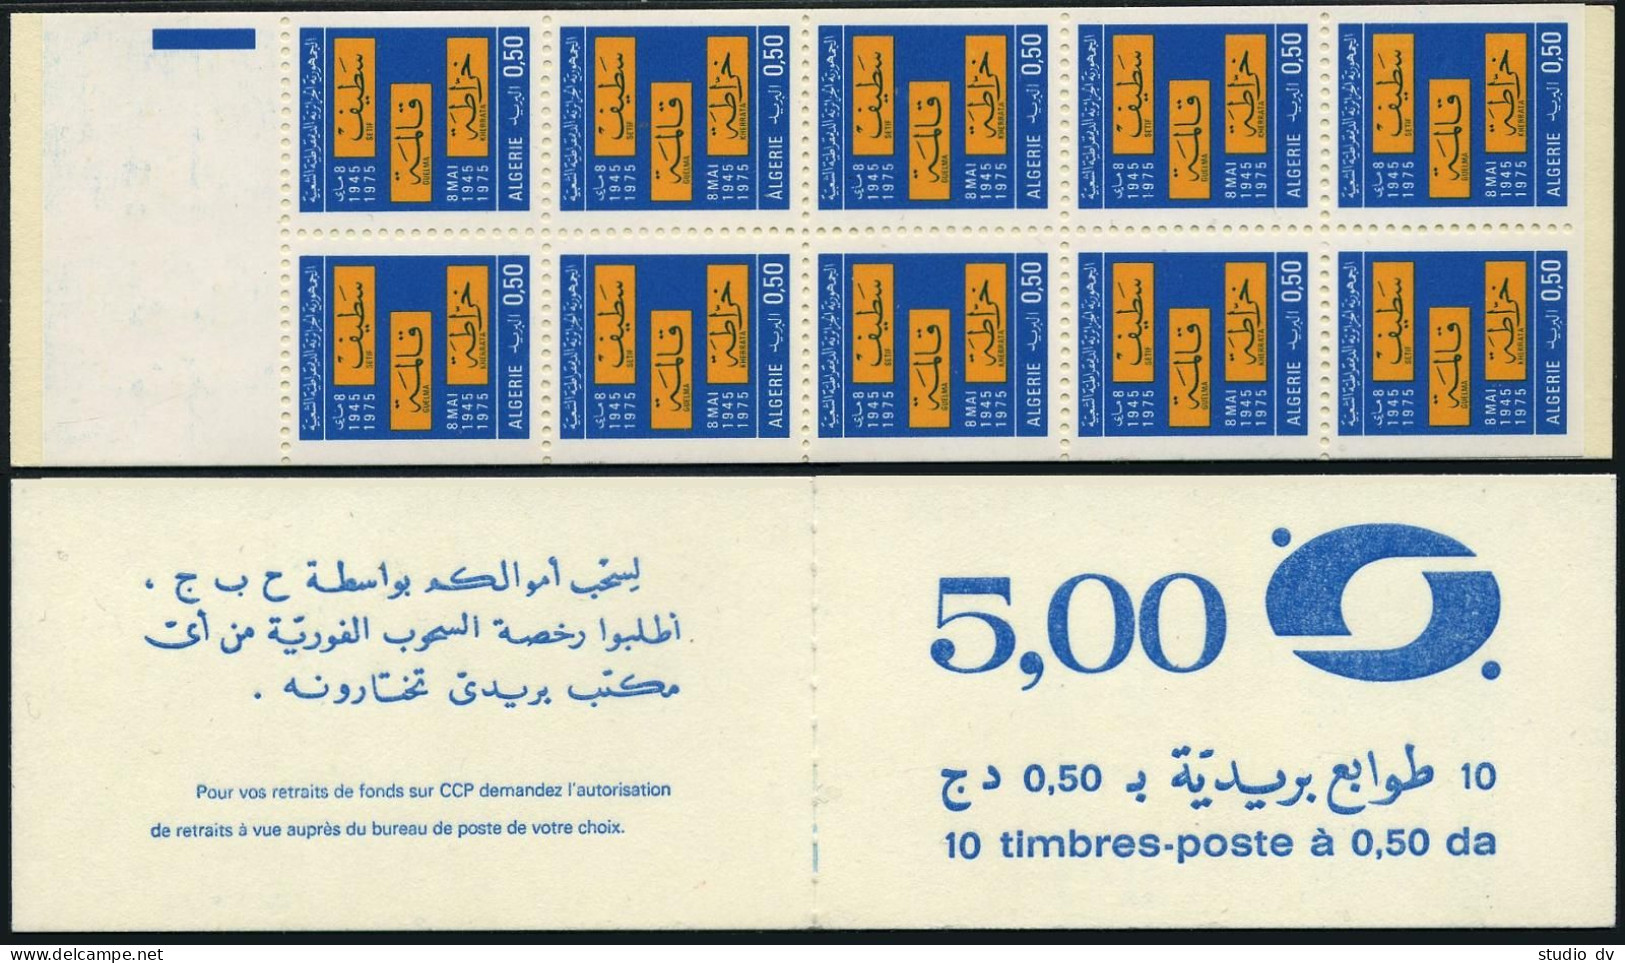 Algeria 572b Booklet Of 10, MNH. Michel 682 MH 2. Setif,Guelma, Kherrata, 1976. - Algerien (1962-...)